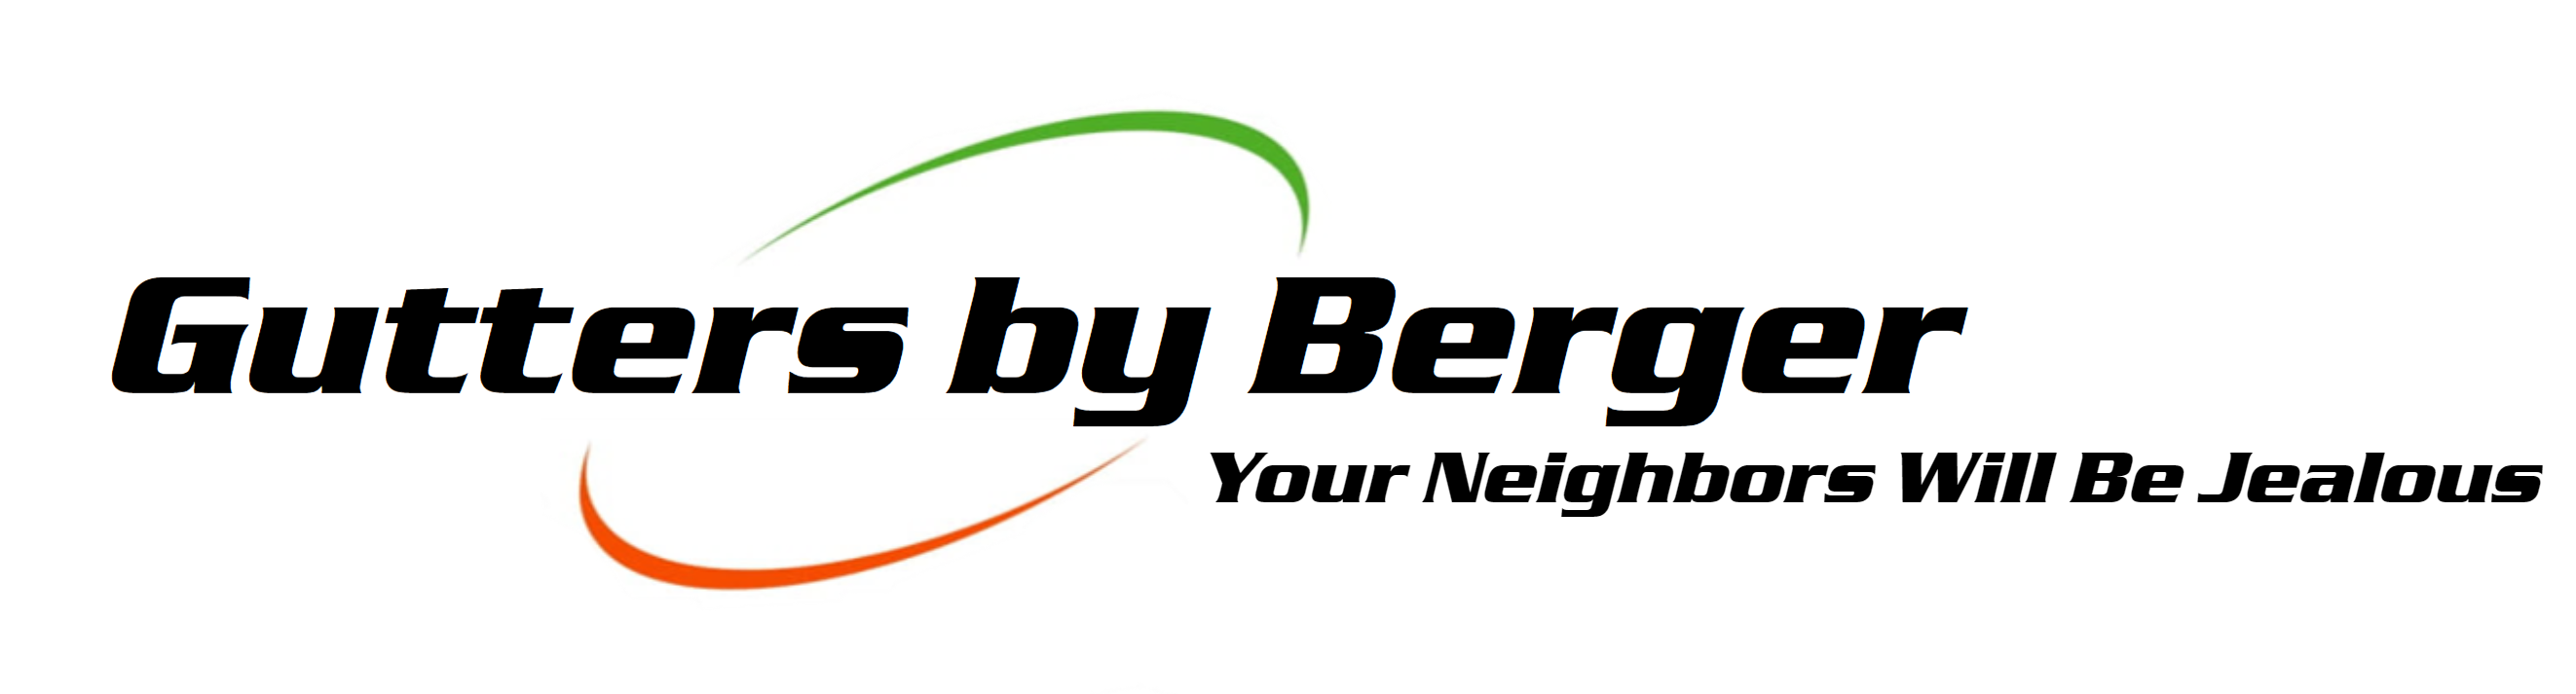 Berger Home Services, LLC Logo